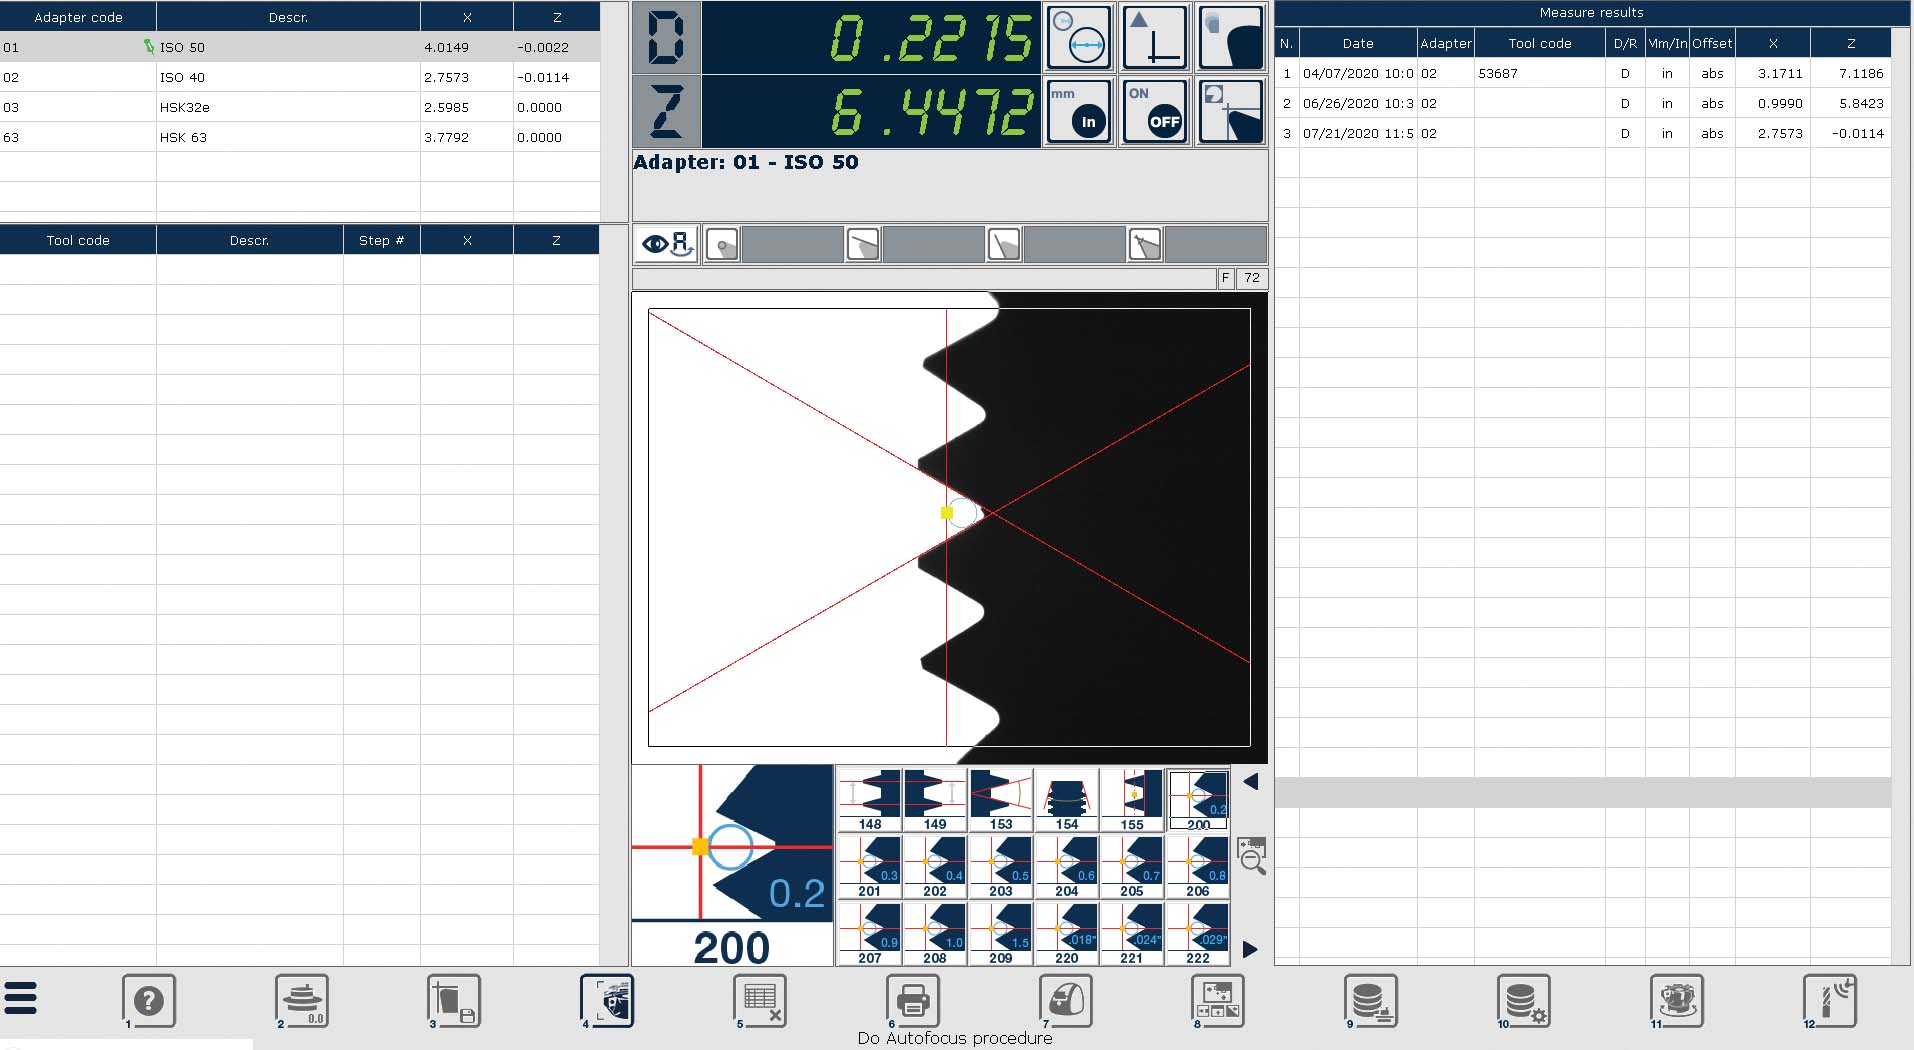 Edge Pro Control Software automatic measurement screen capture.